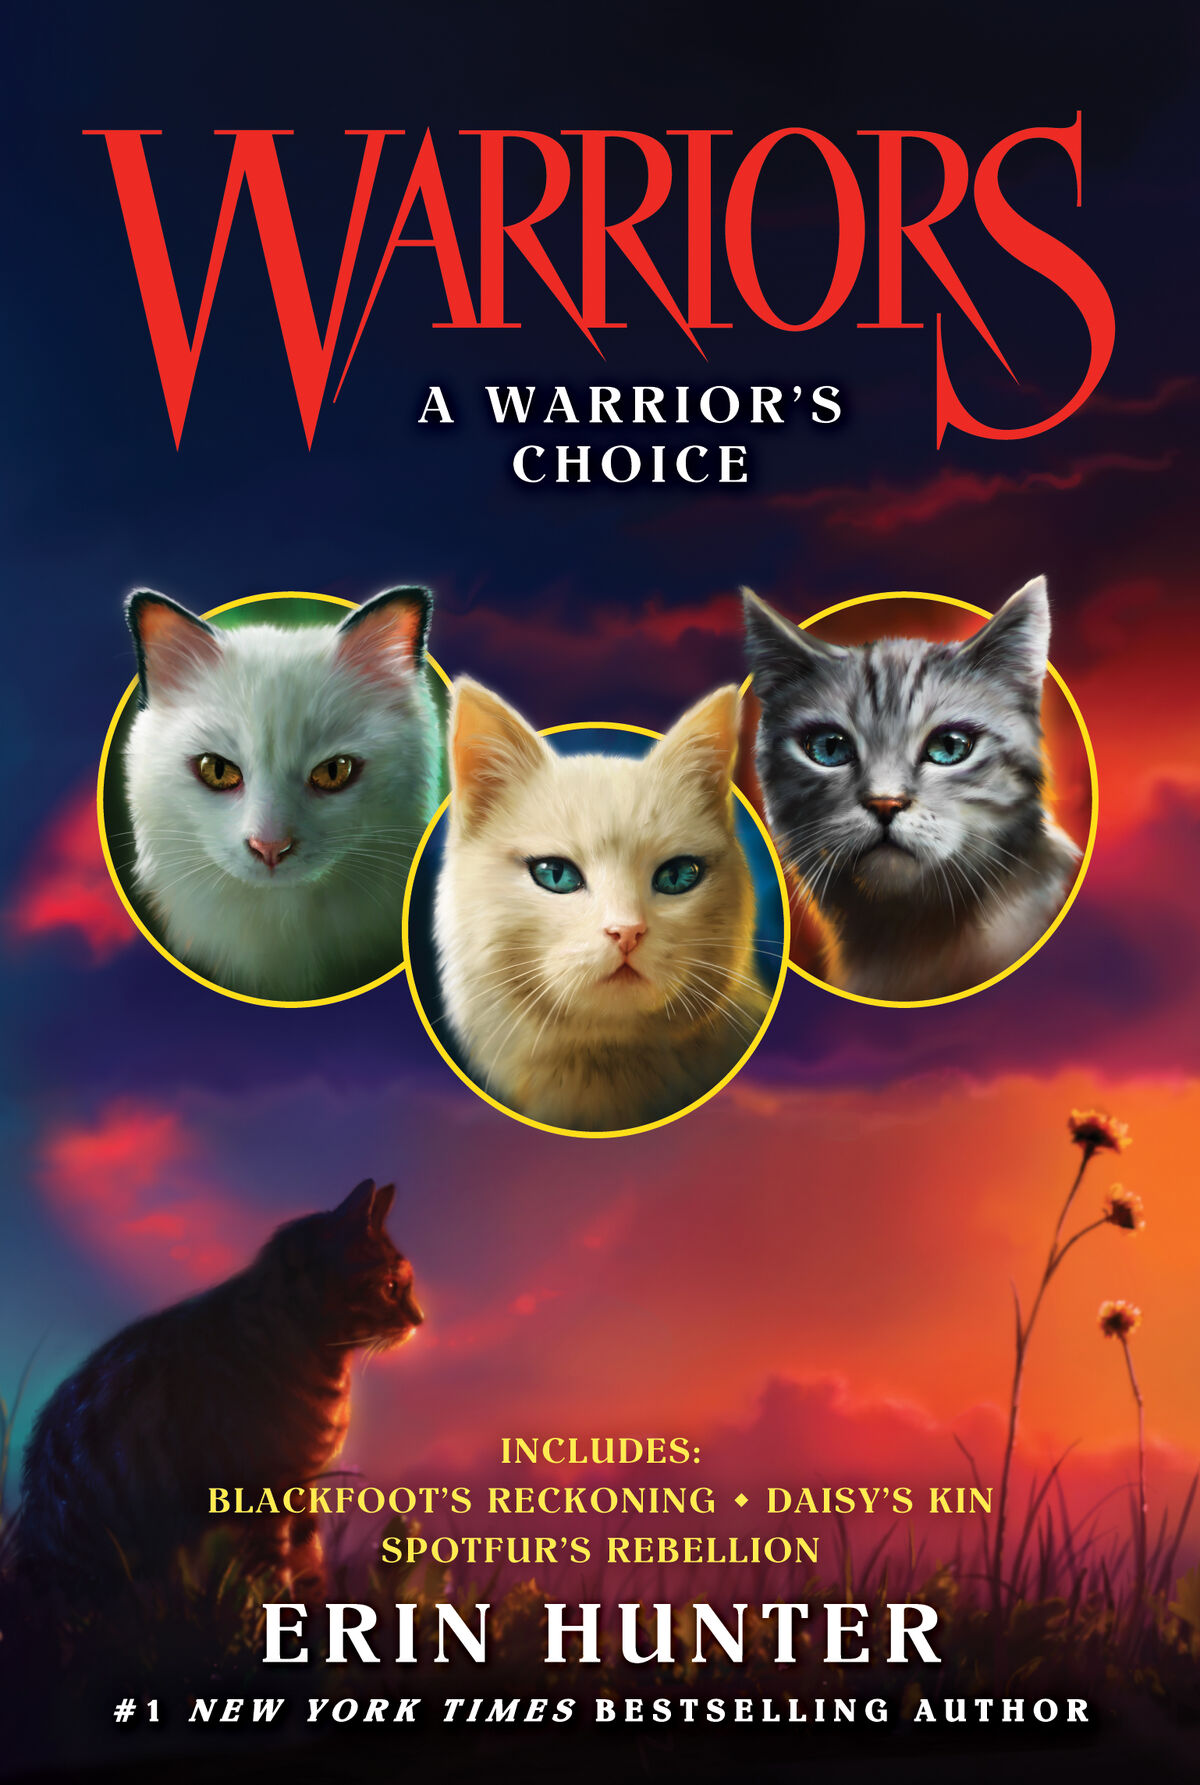 Warrior Cats: Glossary, Warrior Cats Guide